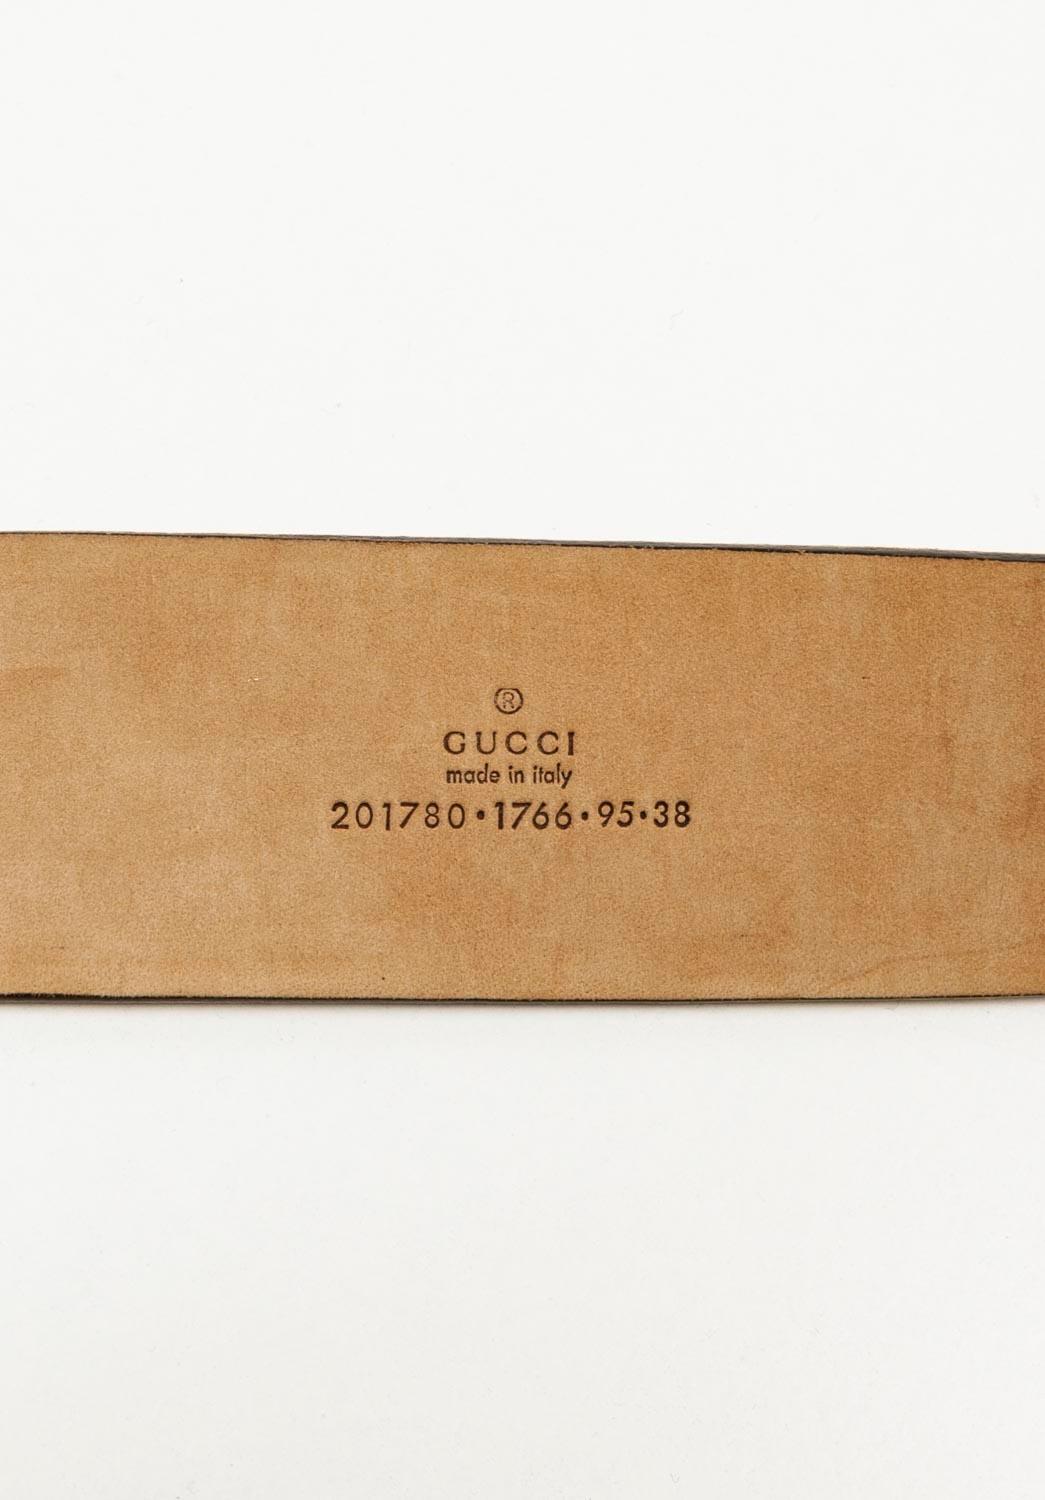 Gucci Men Leather Belt Size 95, S673 For Sale 2